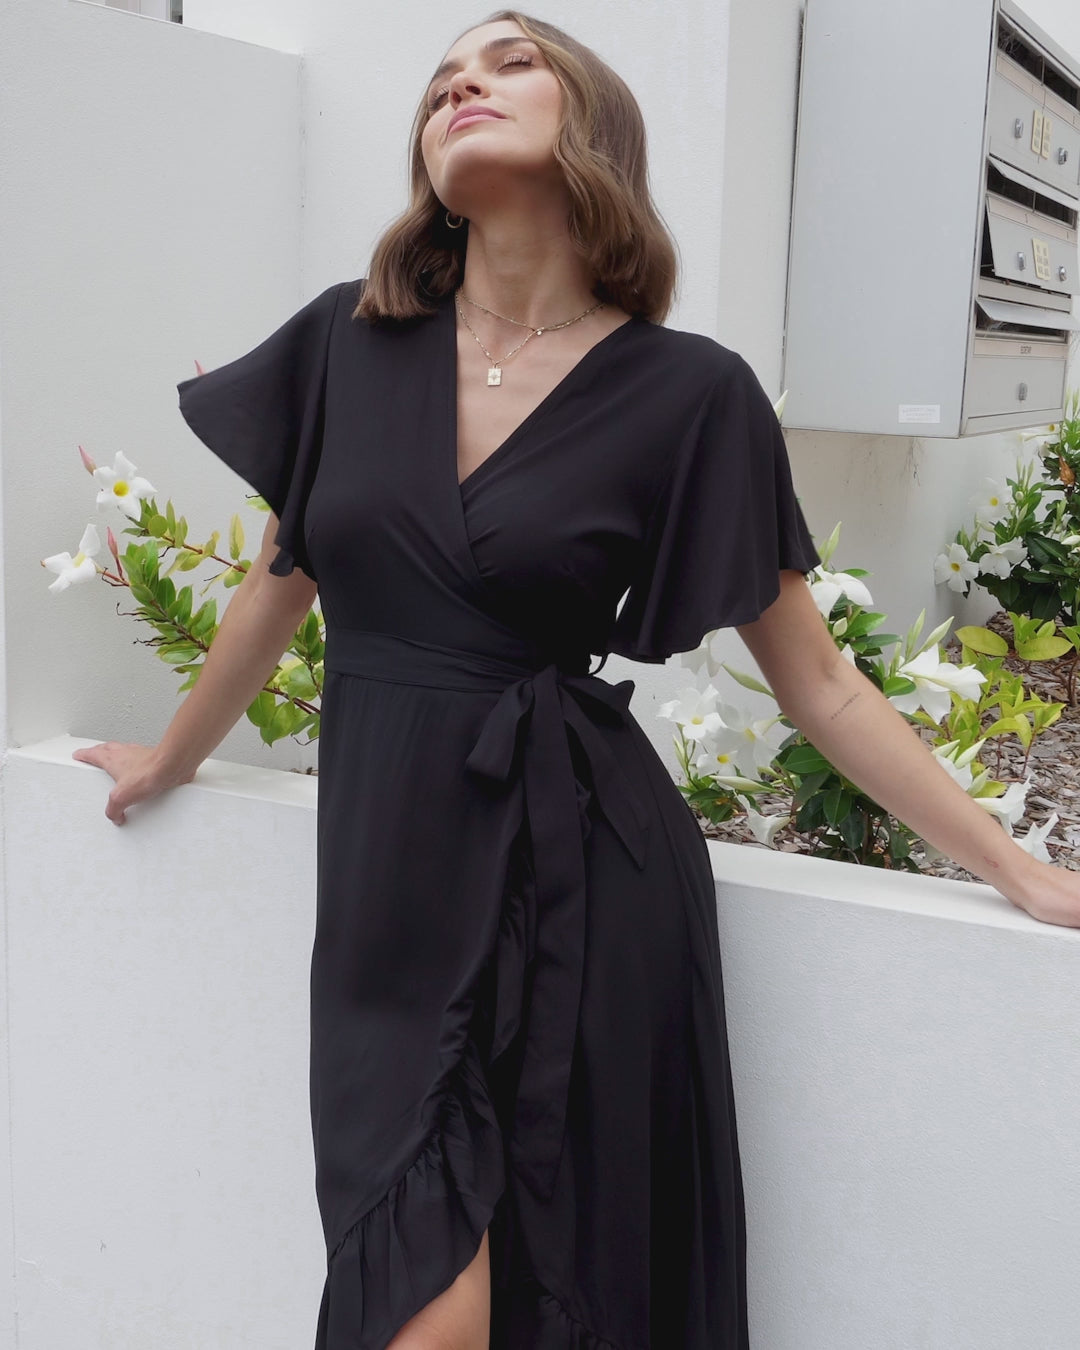 Carolina Midi Dress - V Neck Wrap Dress with Ruffle High Low Hemline in Black